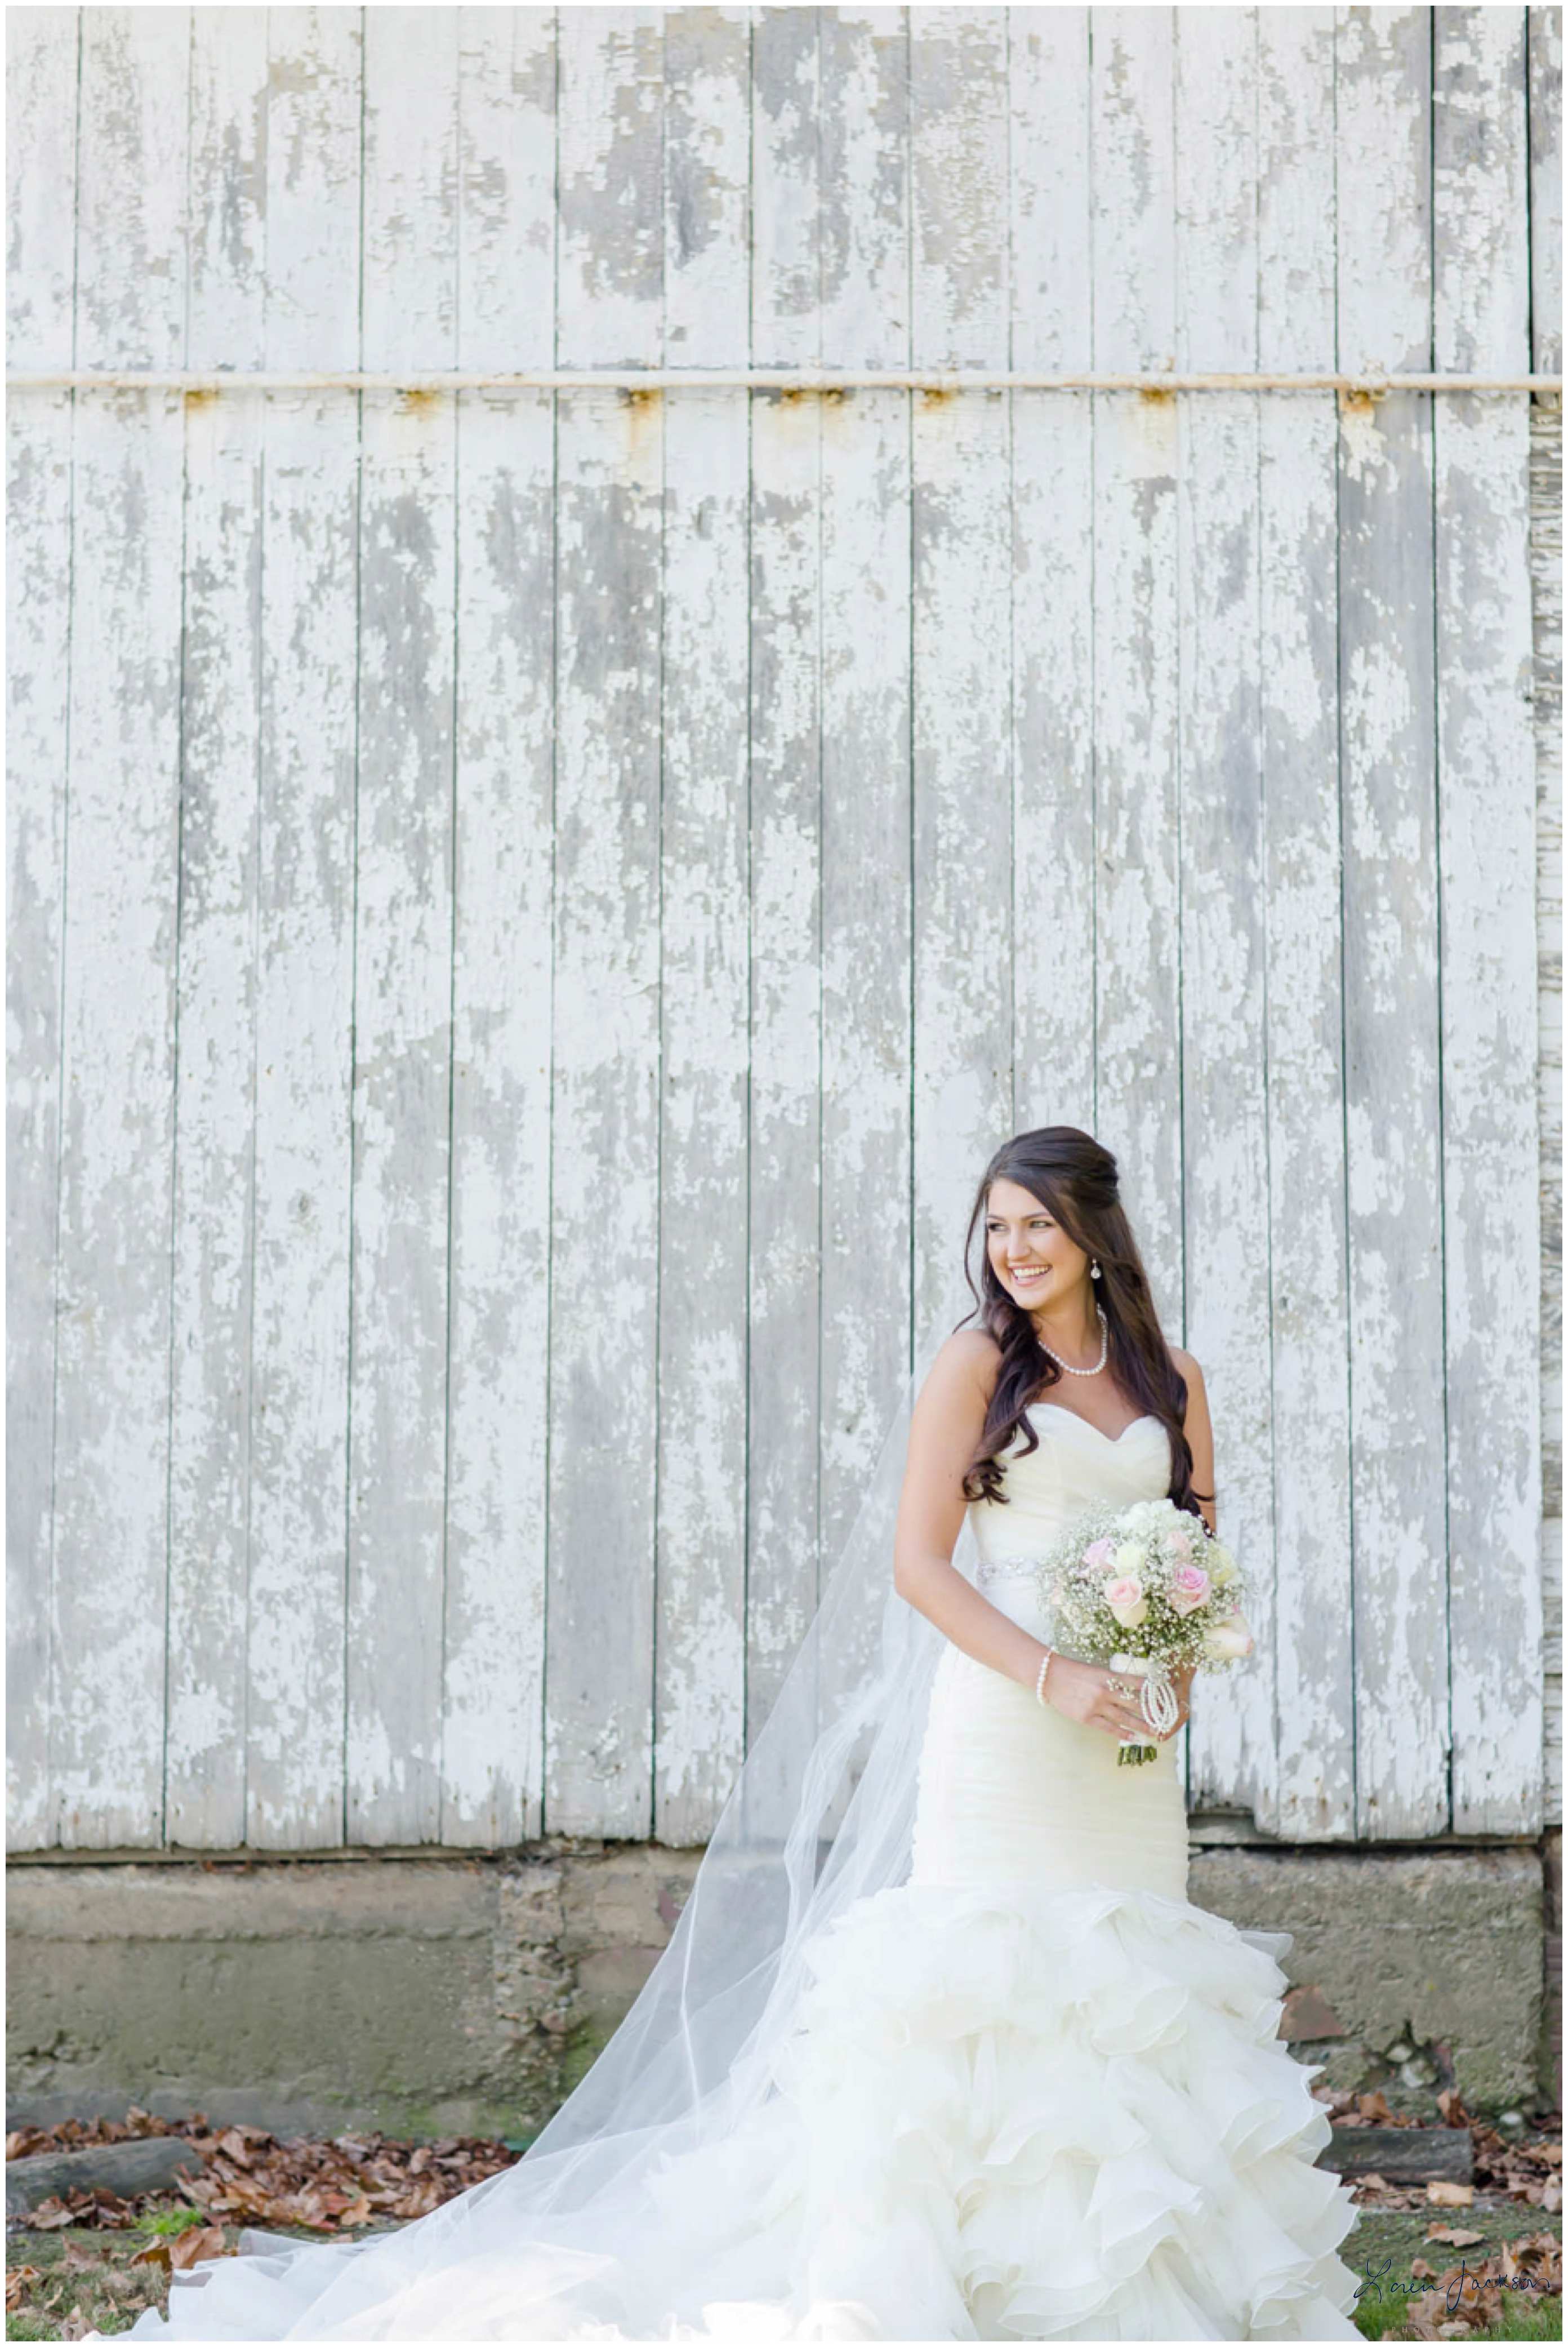 Loren-Jackson-Photography-brookside-farm-fall-wedding-38.jpg